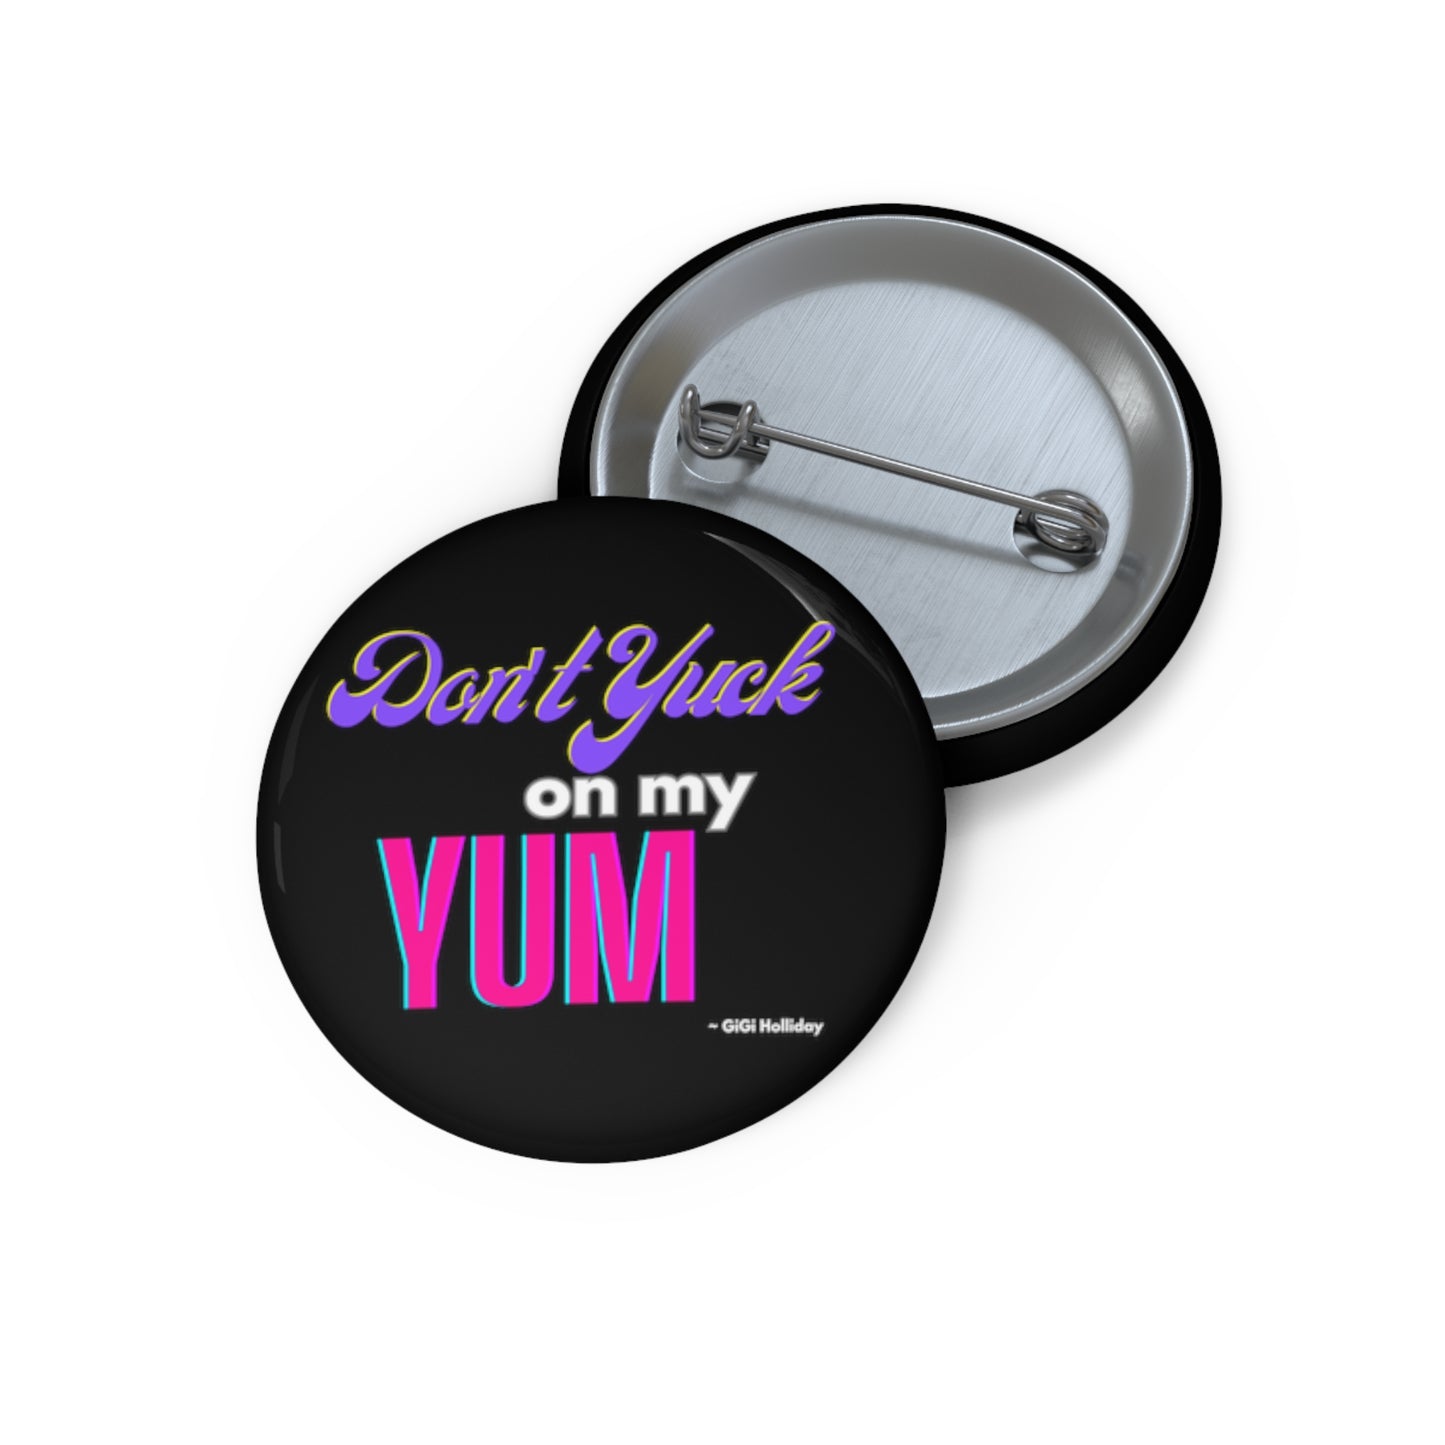 GiGi Holliday Quote "Don't Yuck On My Yum" Pin BLACK